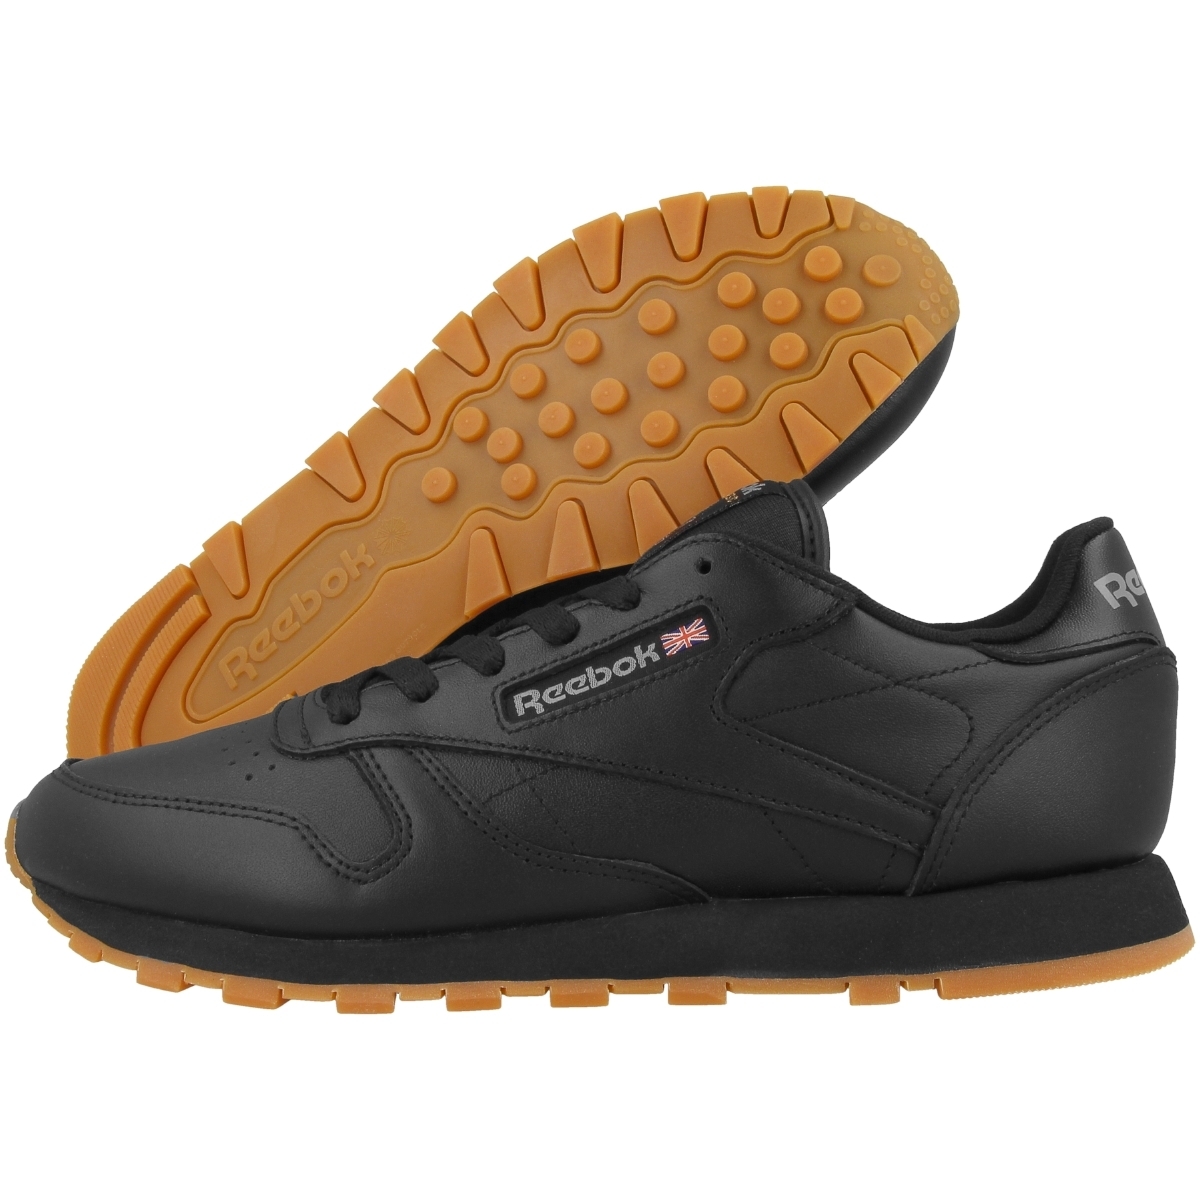 Reebok Classic Leather Women Schuhe schwarz